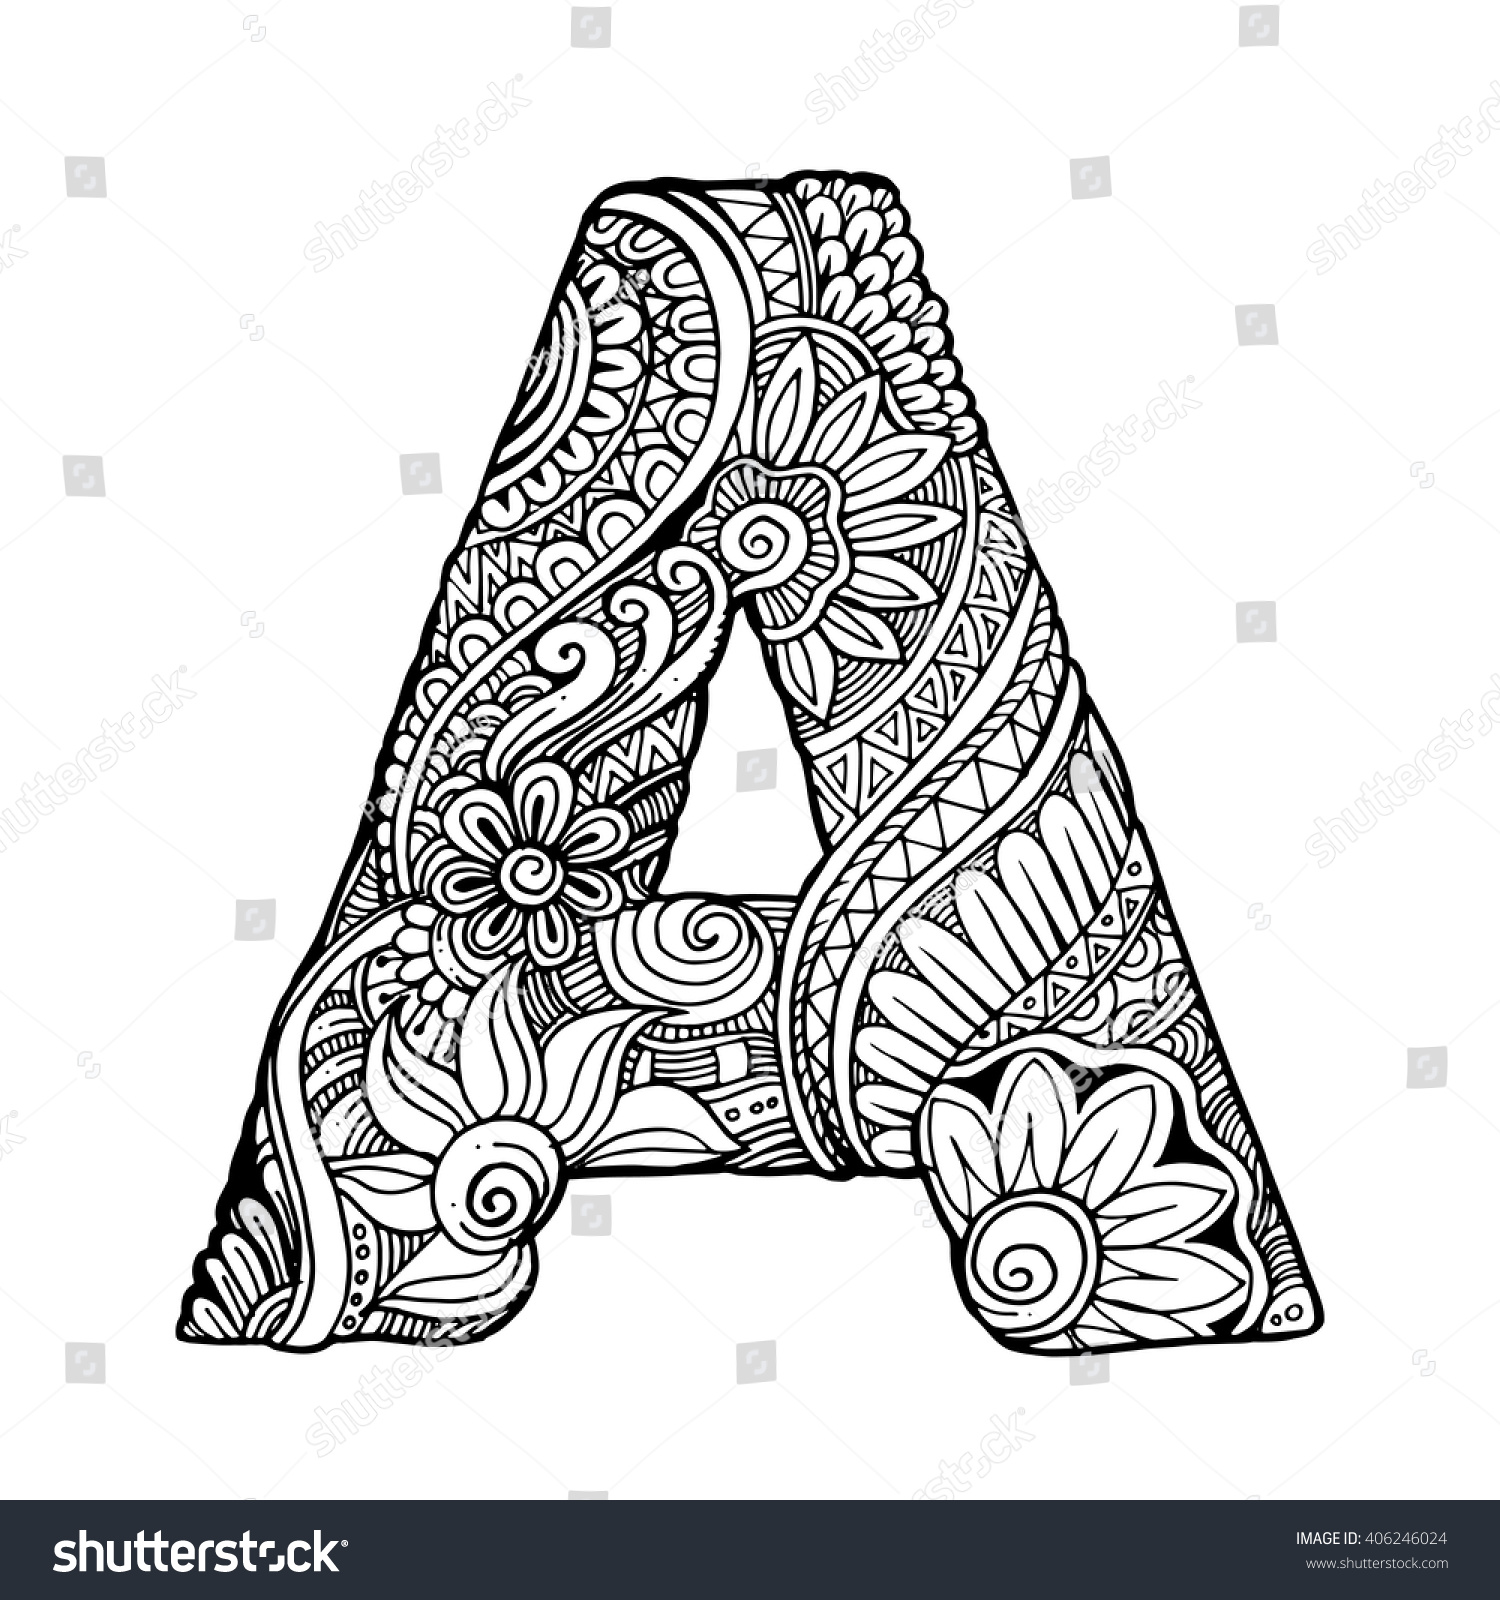 Zentangle Stylized Alphabet Letter A Vector Stock Vector 406246024 ...